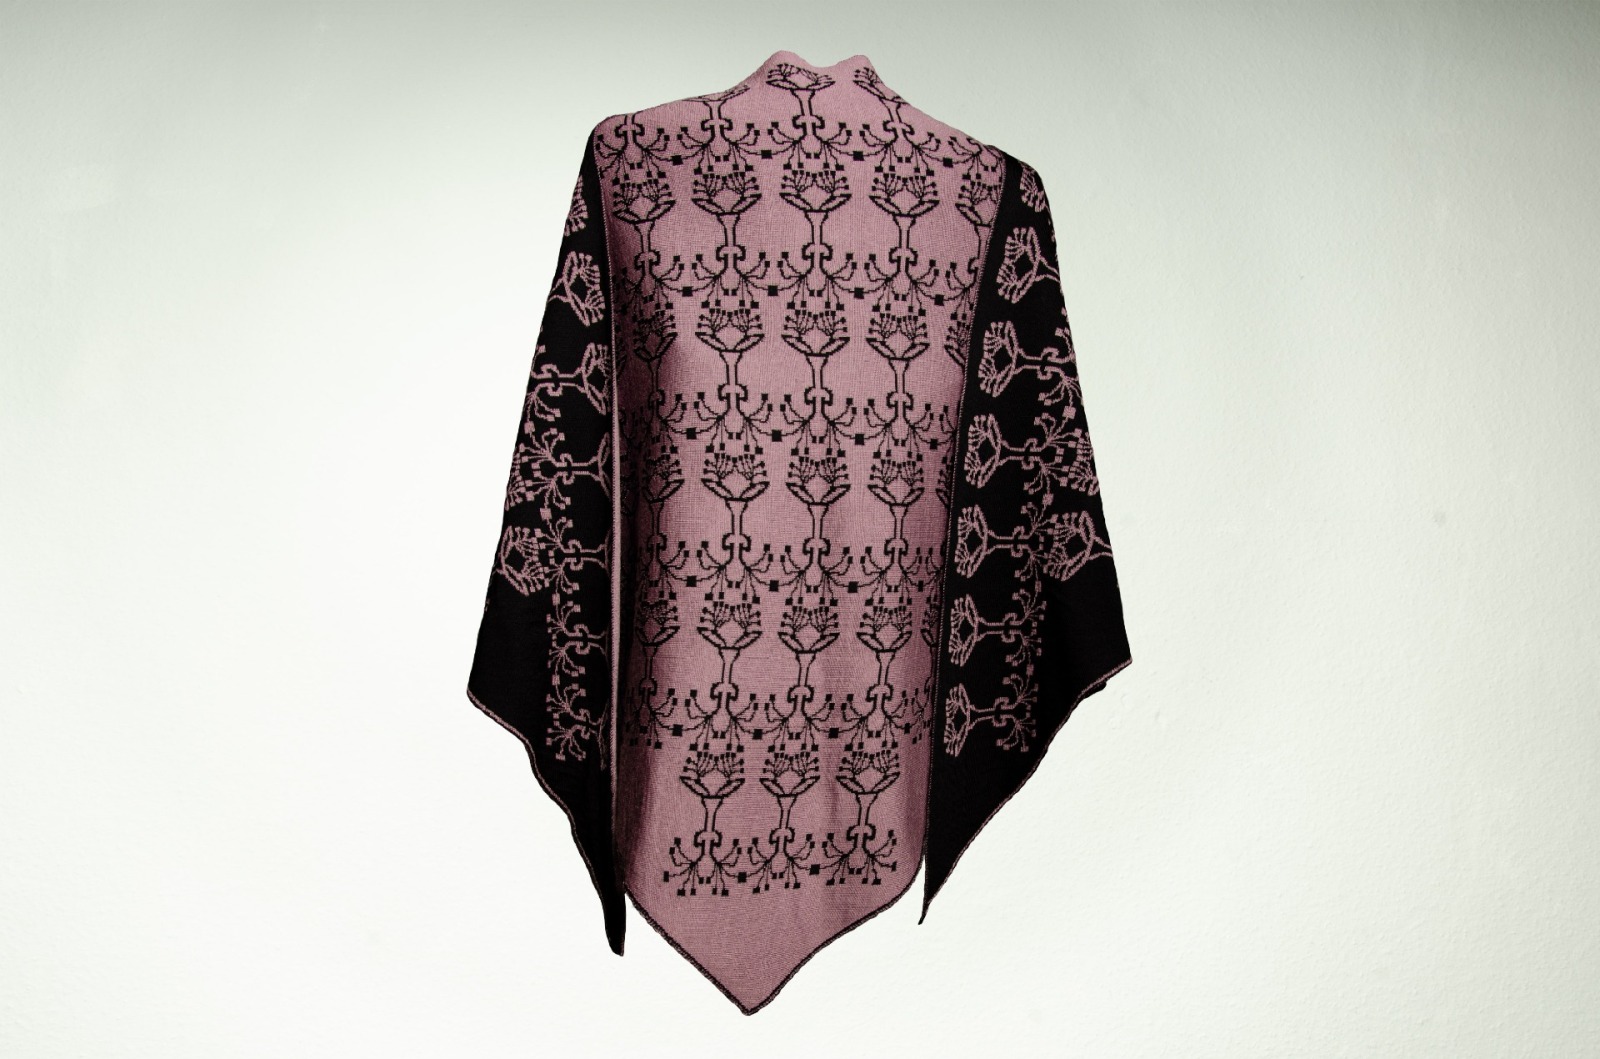 festive stole, triangular shawl jewelry in black and blackberry